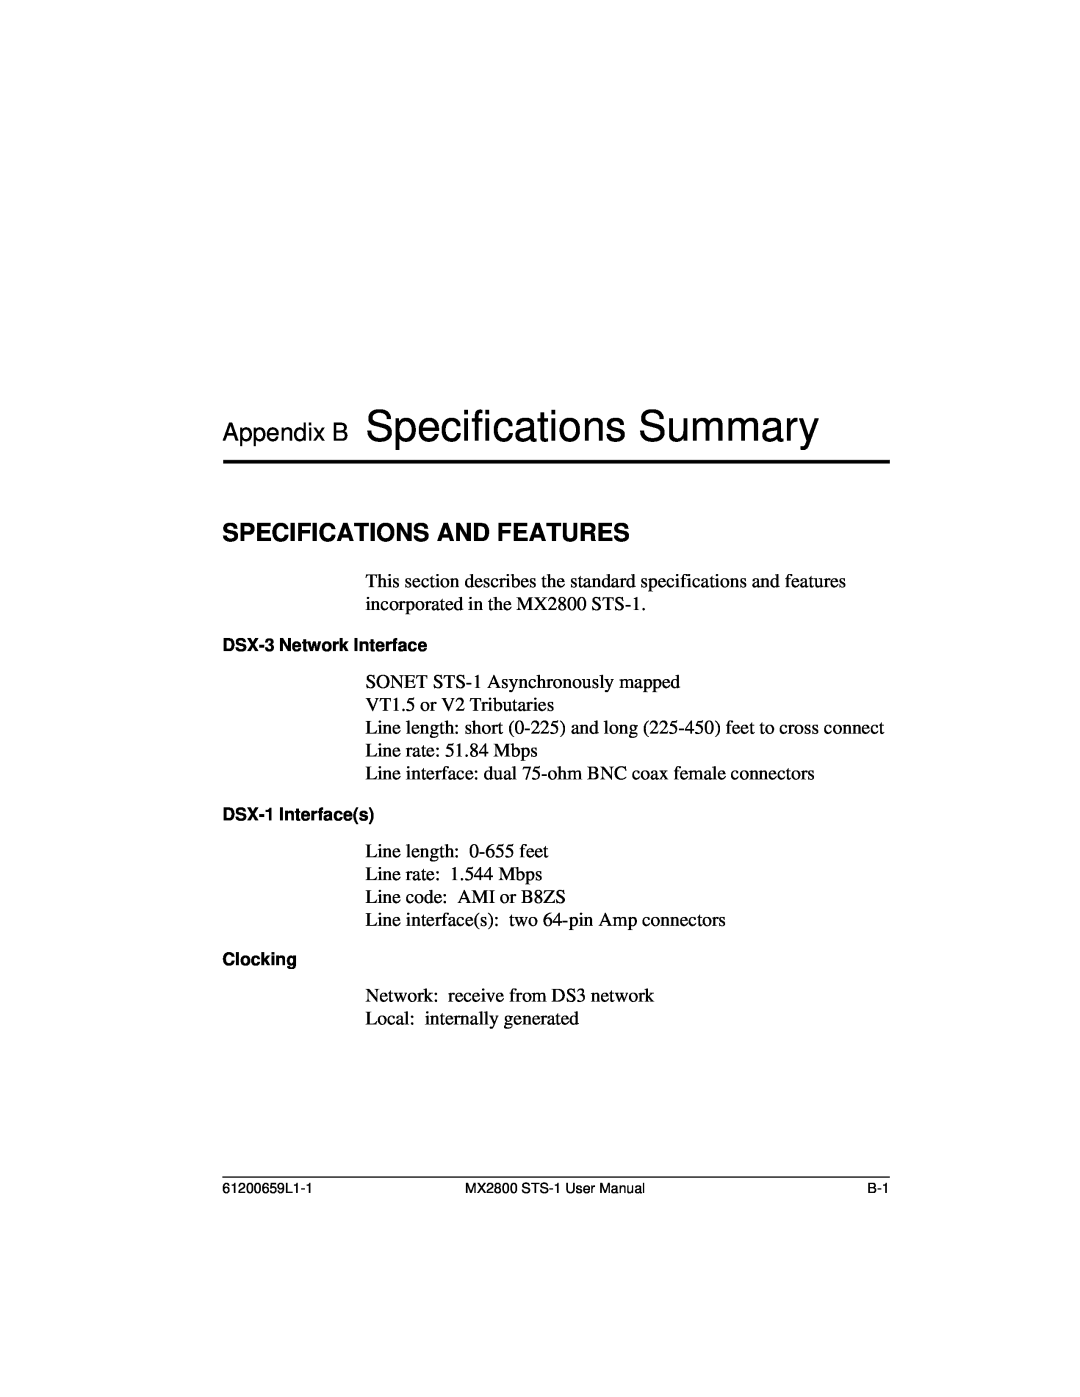 ADTRAN 1200657L2, 4200659L1, 4175043L2, 4200659L5, 4200659L8 Appendix B Specifications Summary, Specifications And Features 